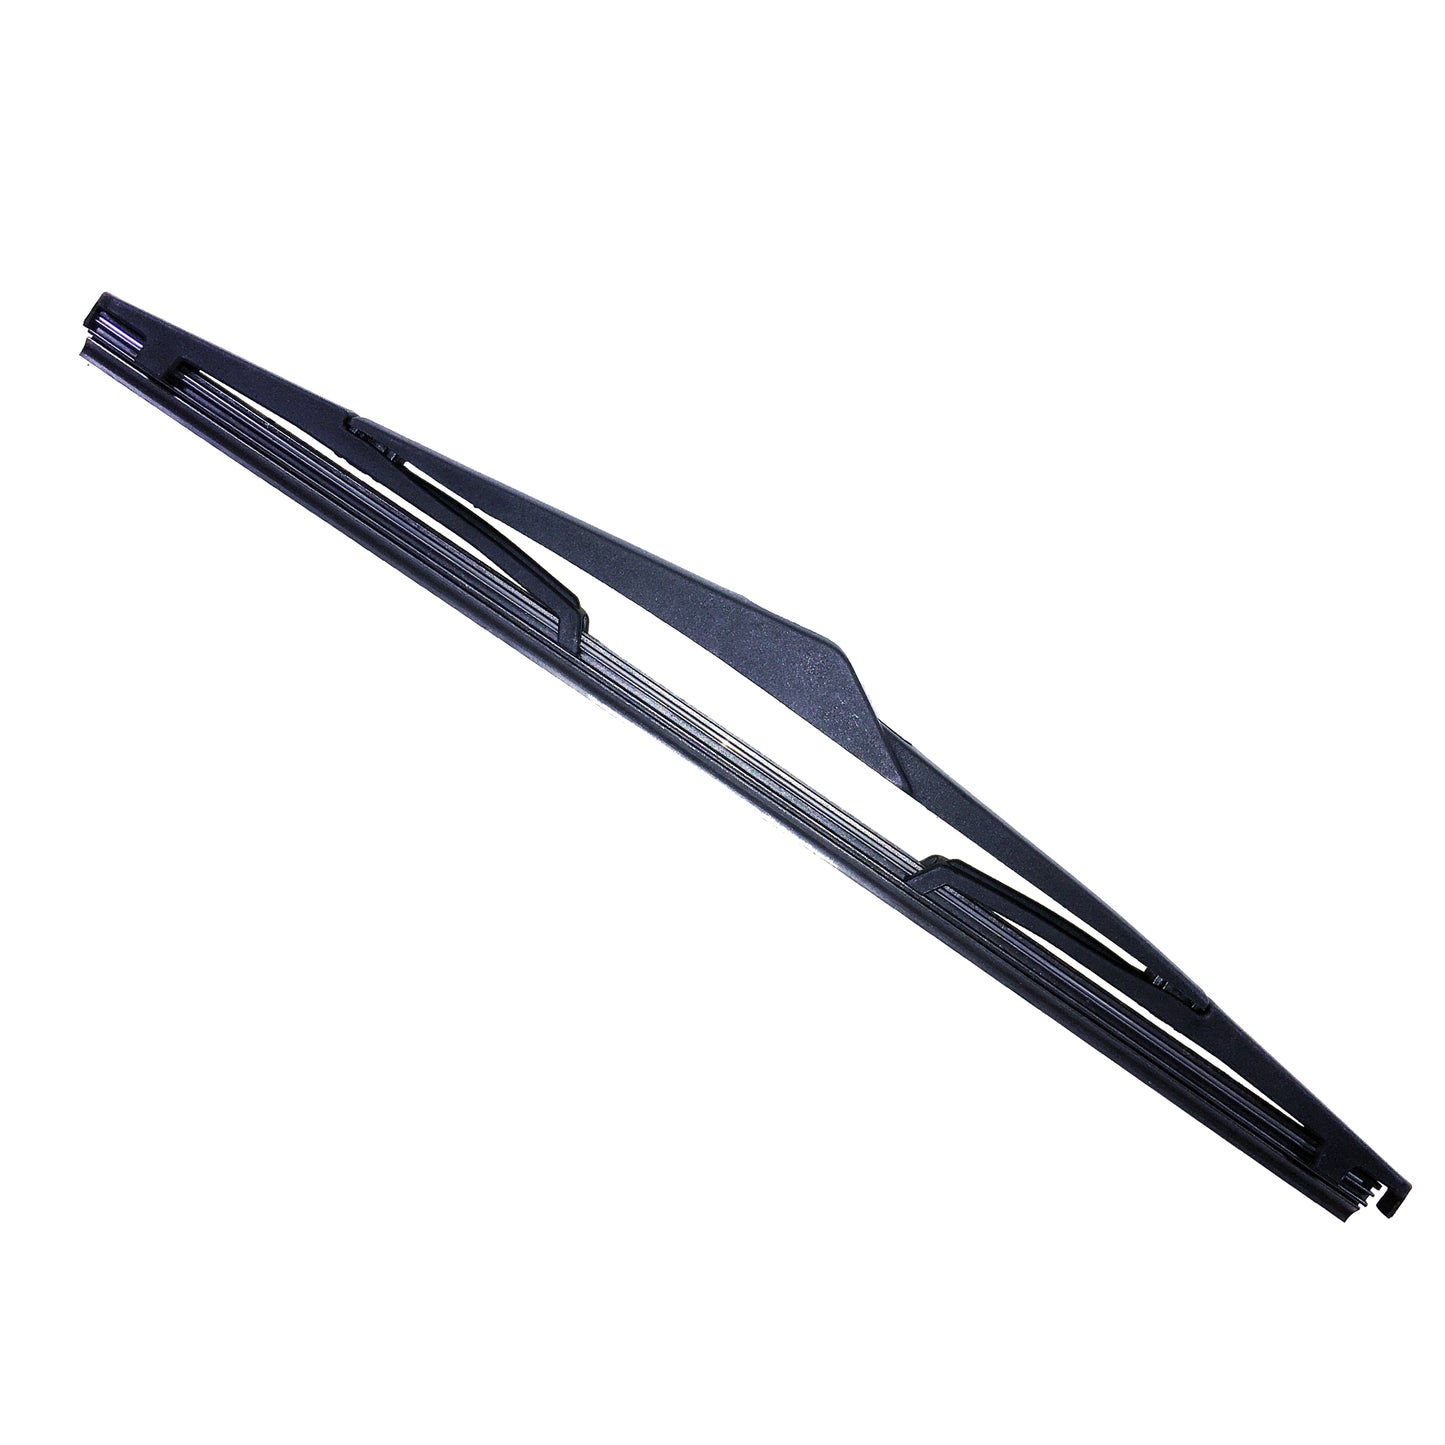 OPEL CORSA Van Oct 2014 to Apr 2019Rear Wiper Blade 